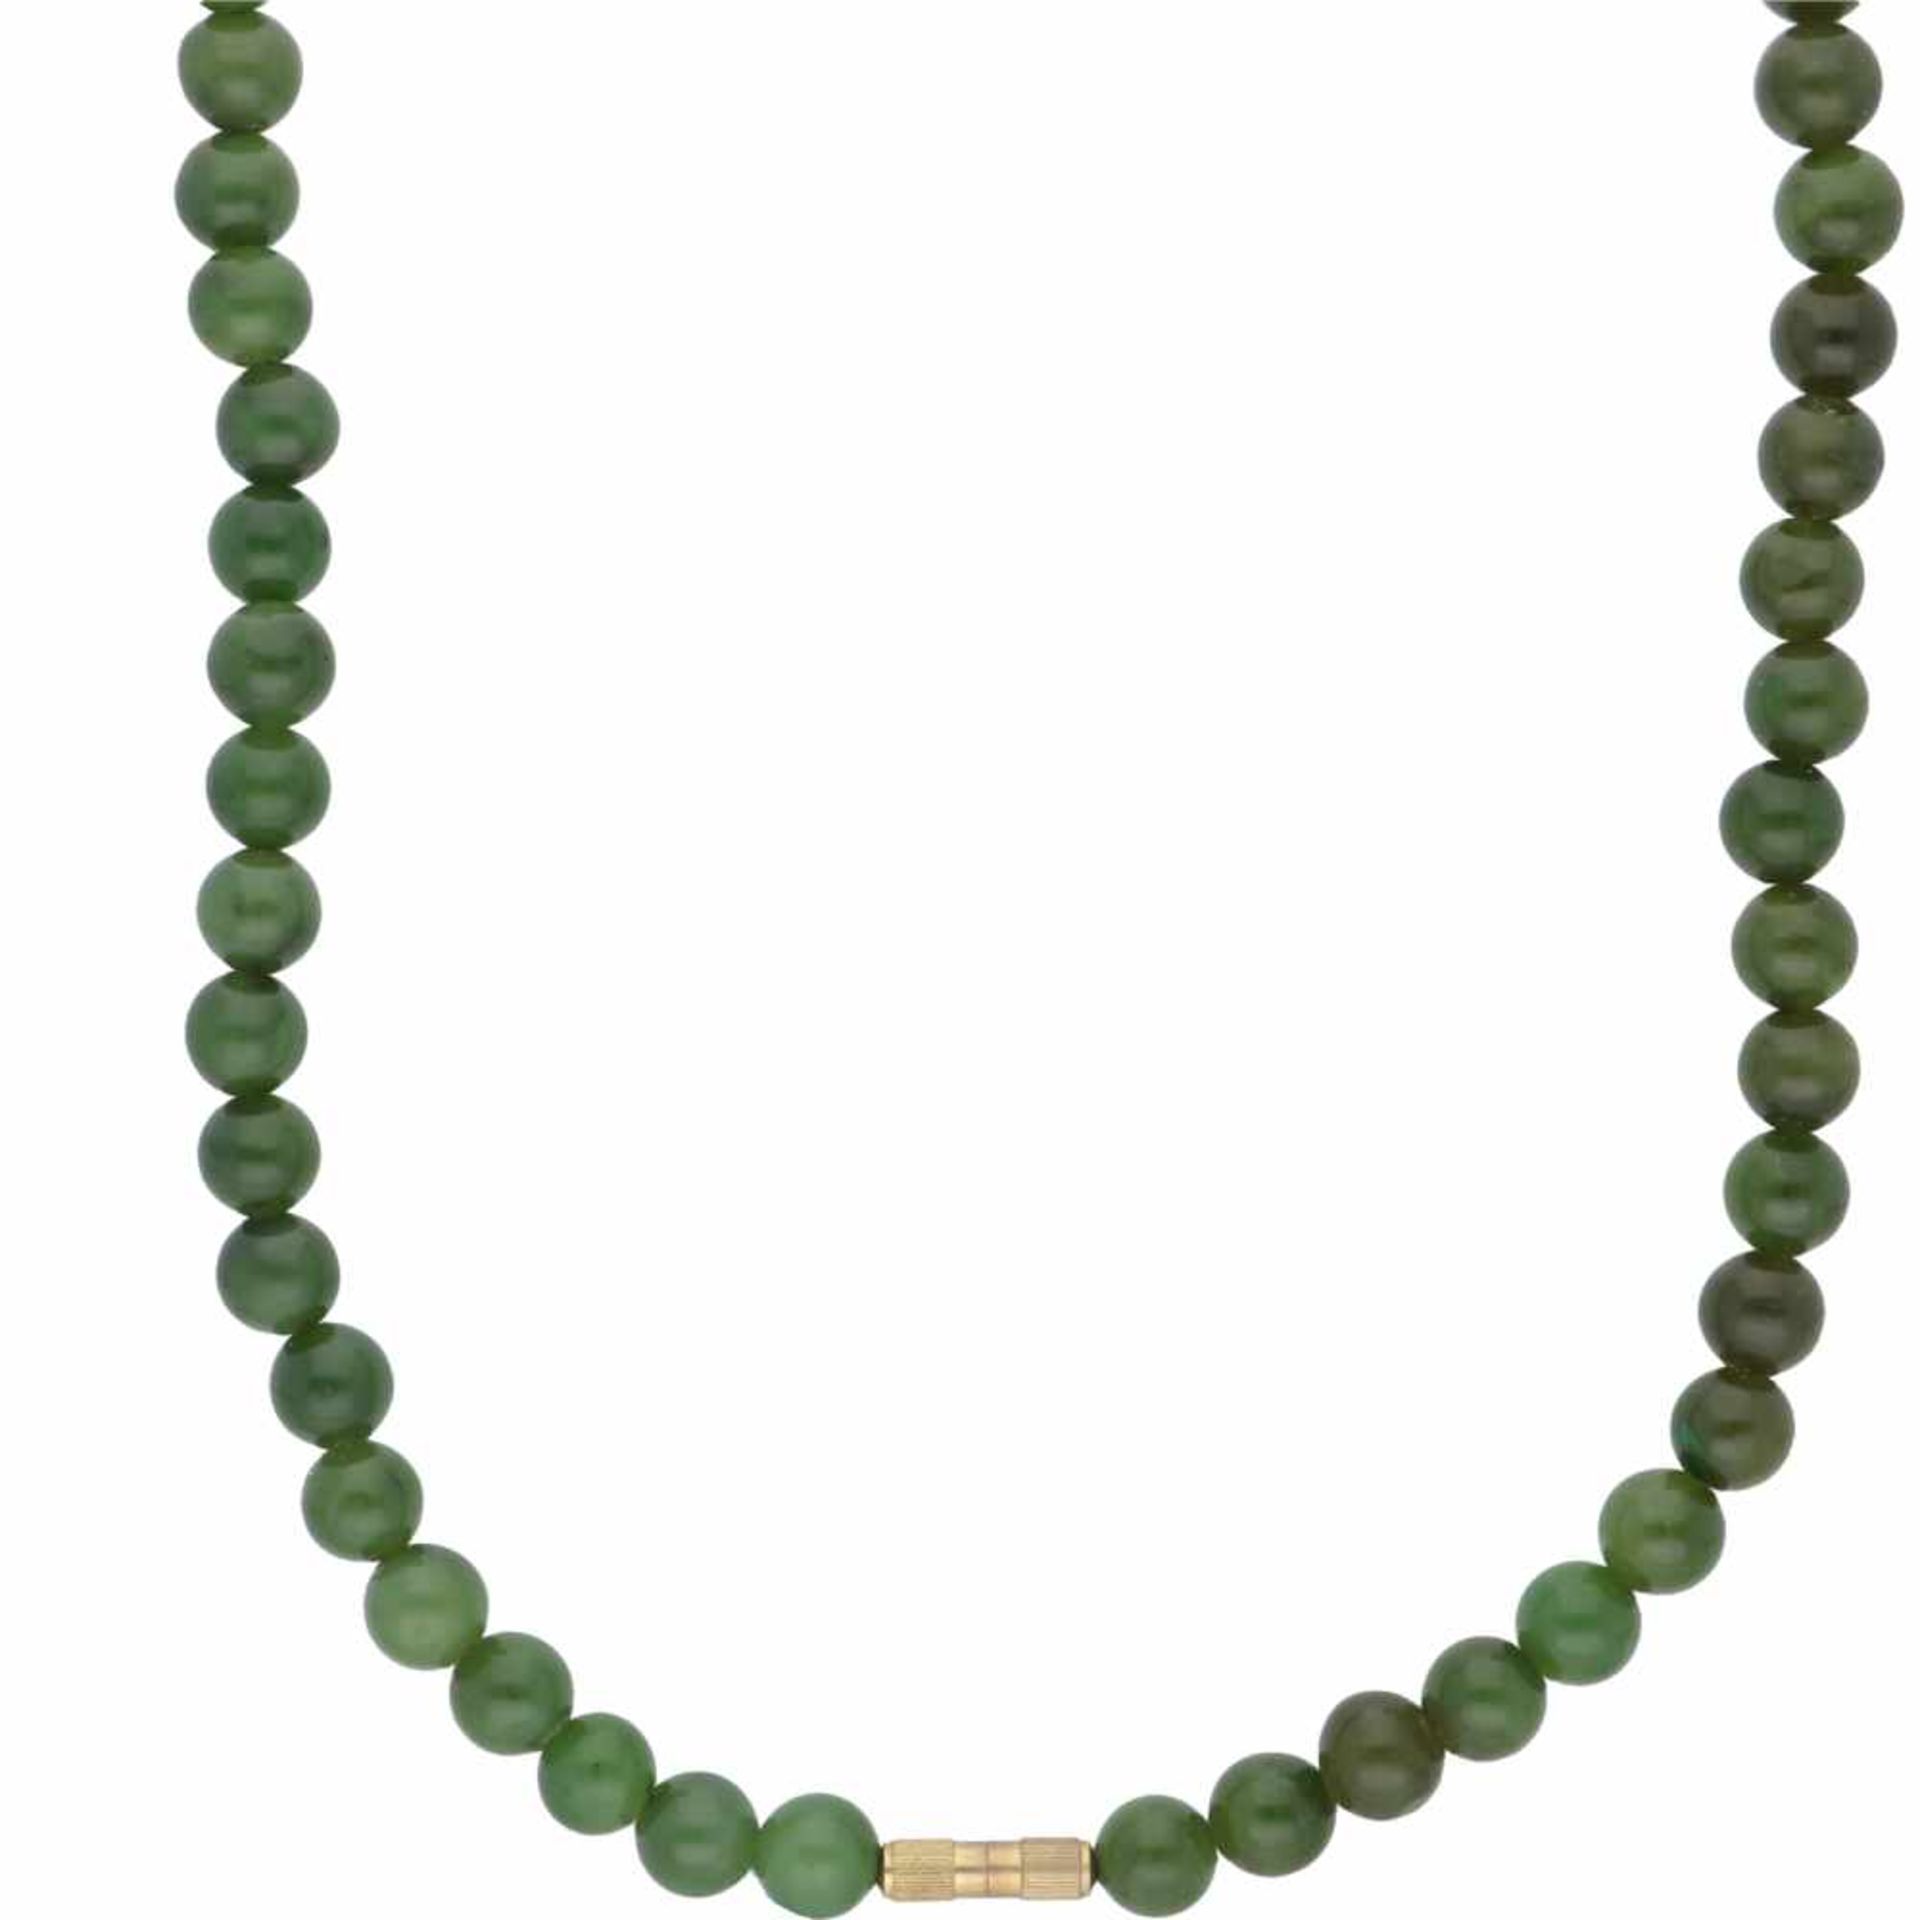 Beaded necklace, jade.